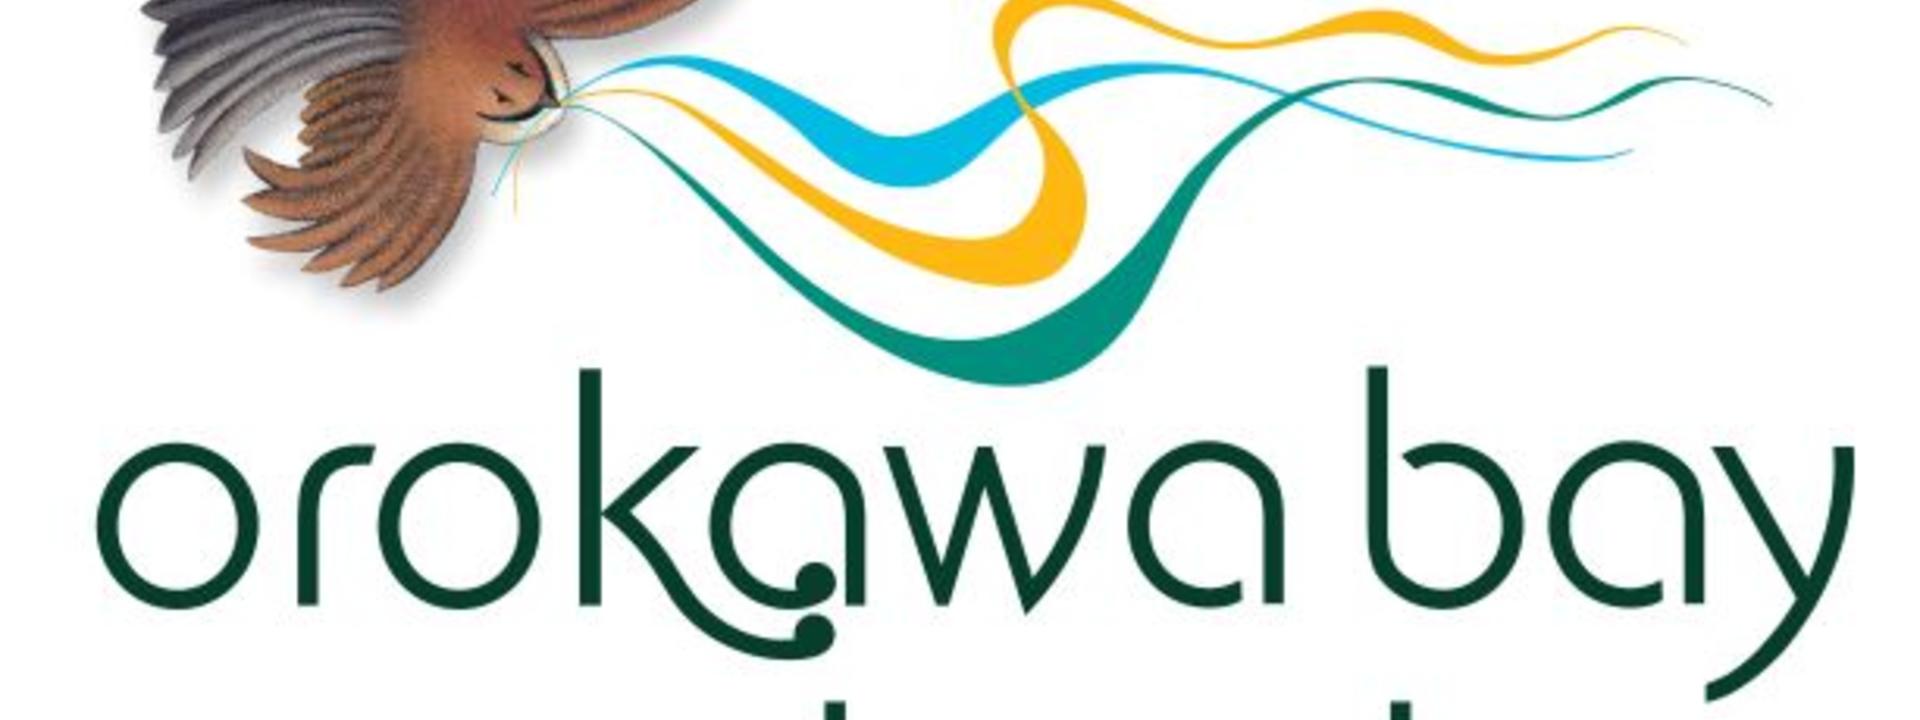 orokawa-fantail-logo-small-image-2.jpg